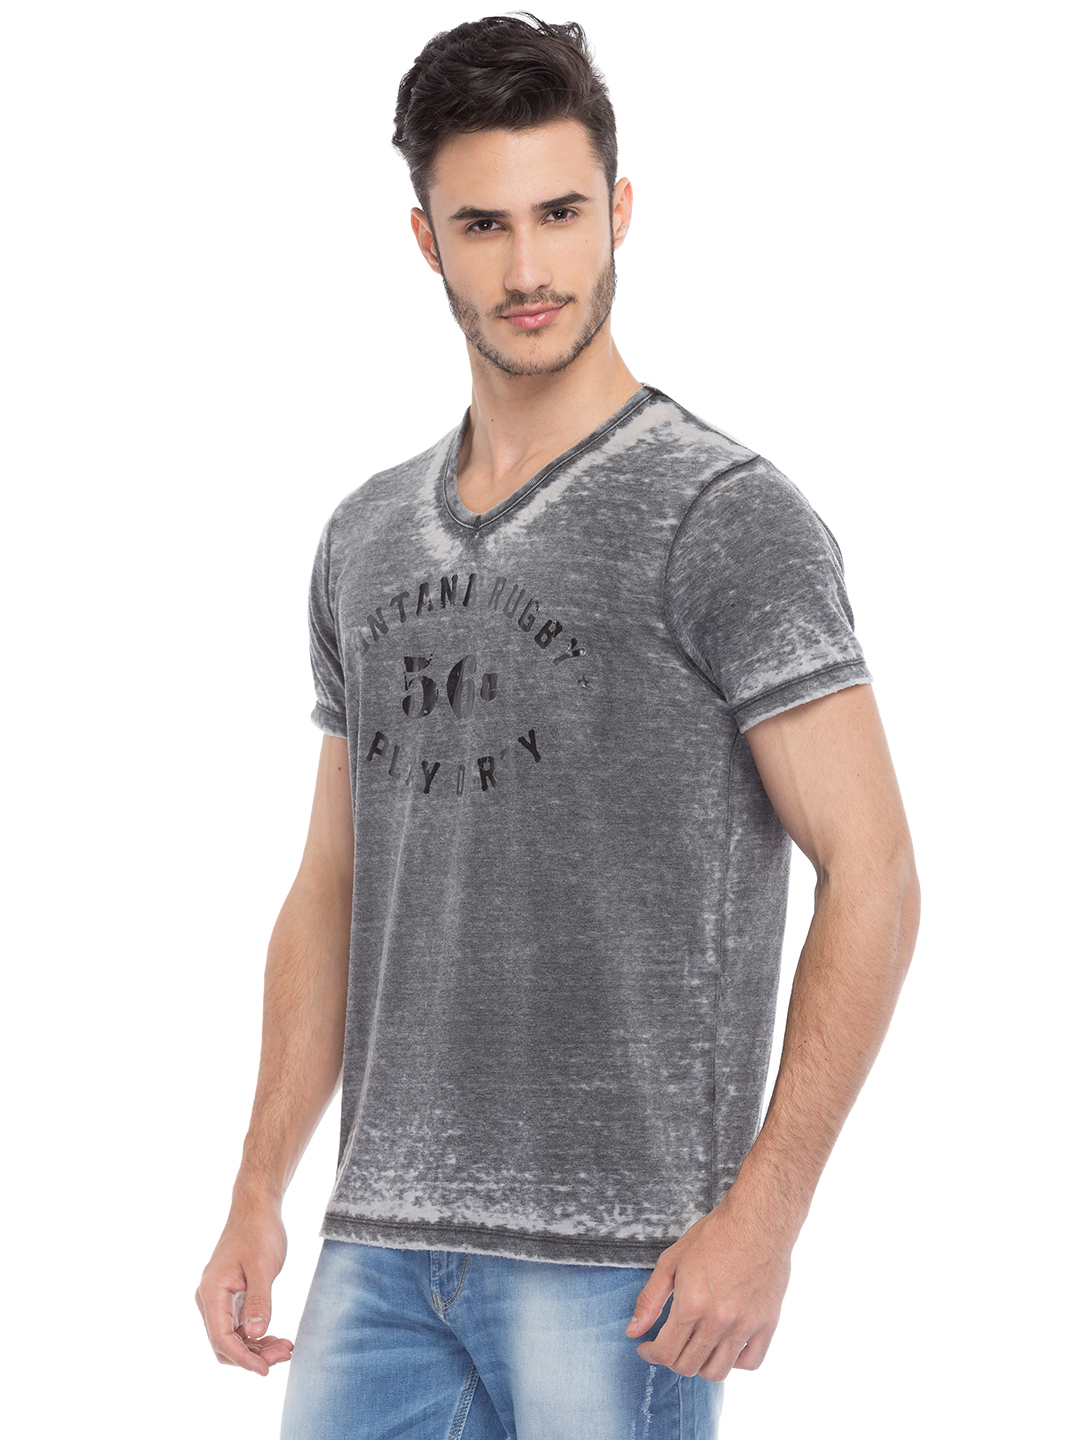 Buy Spykar Mens Black Slim Fit T-Shirt Online @ ₹659 from ShopClues